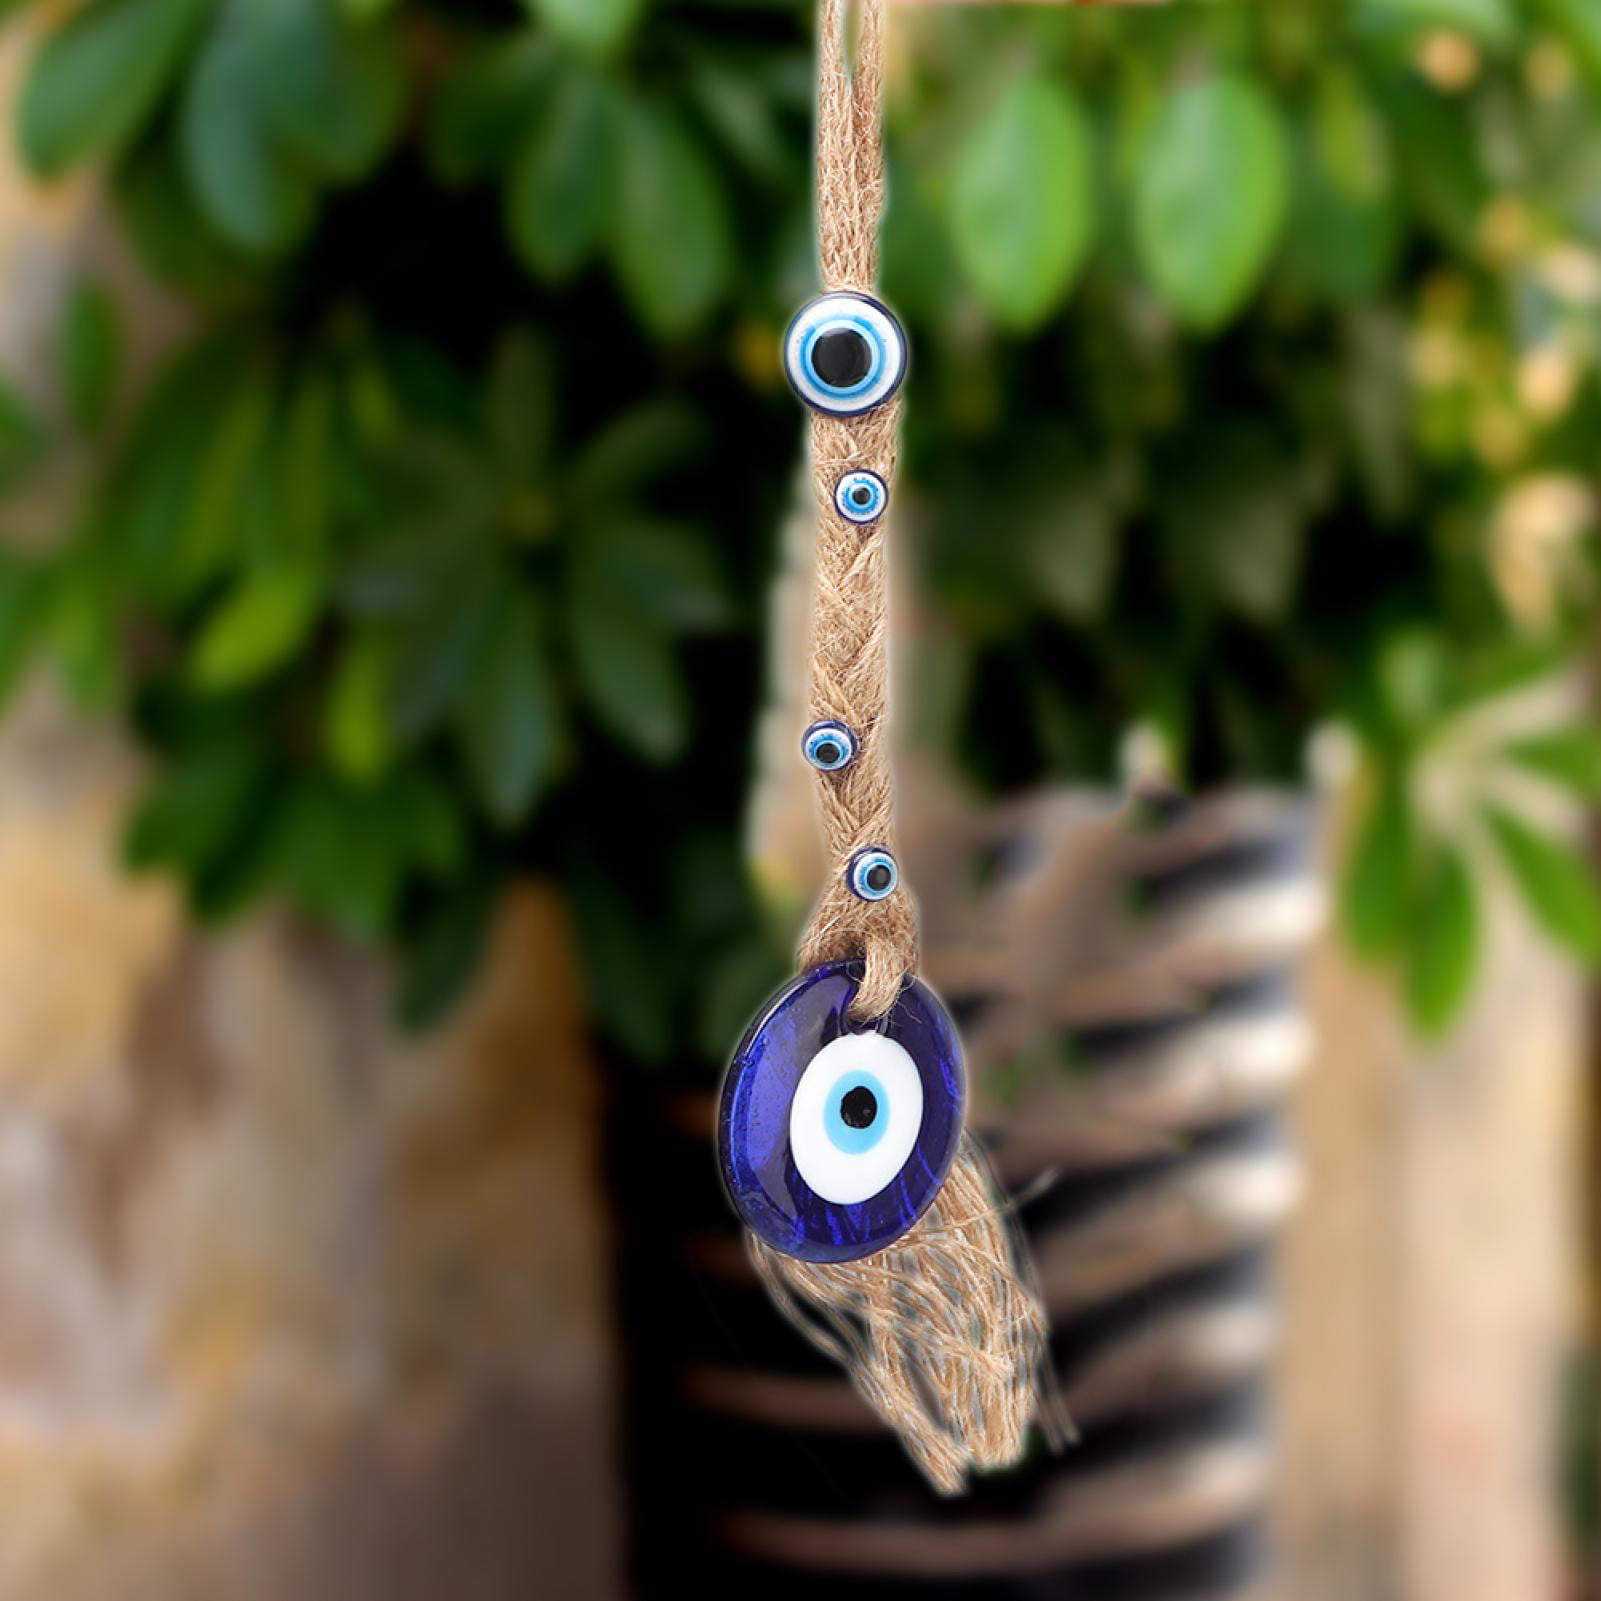 zircon silver evil eye bead pendant bracelet set protection talisman gift